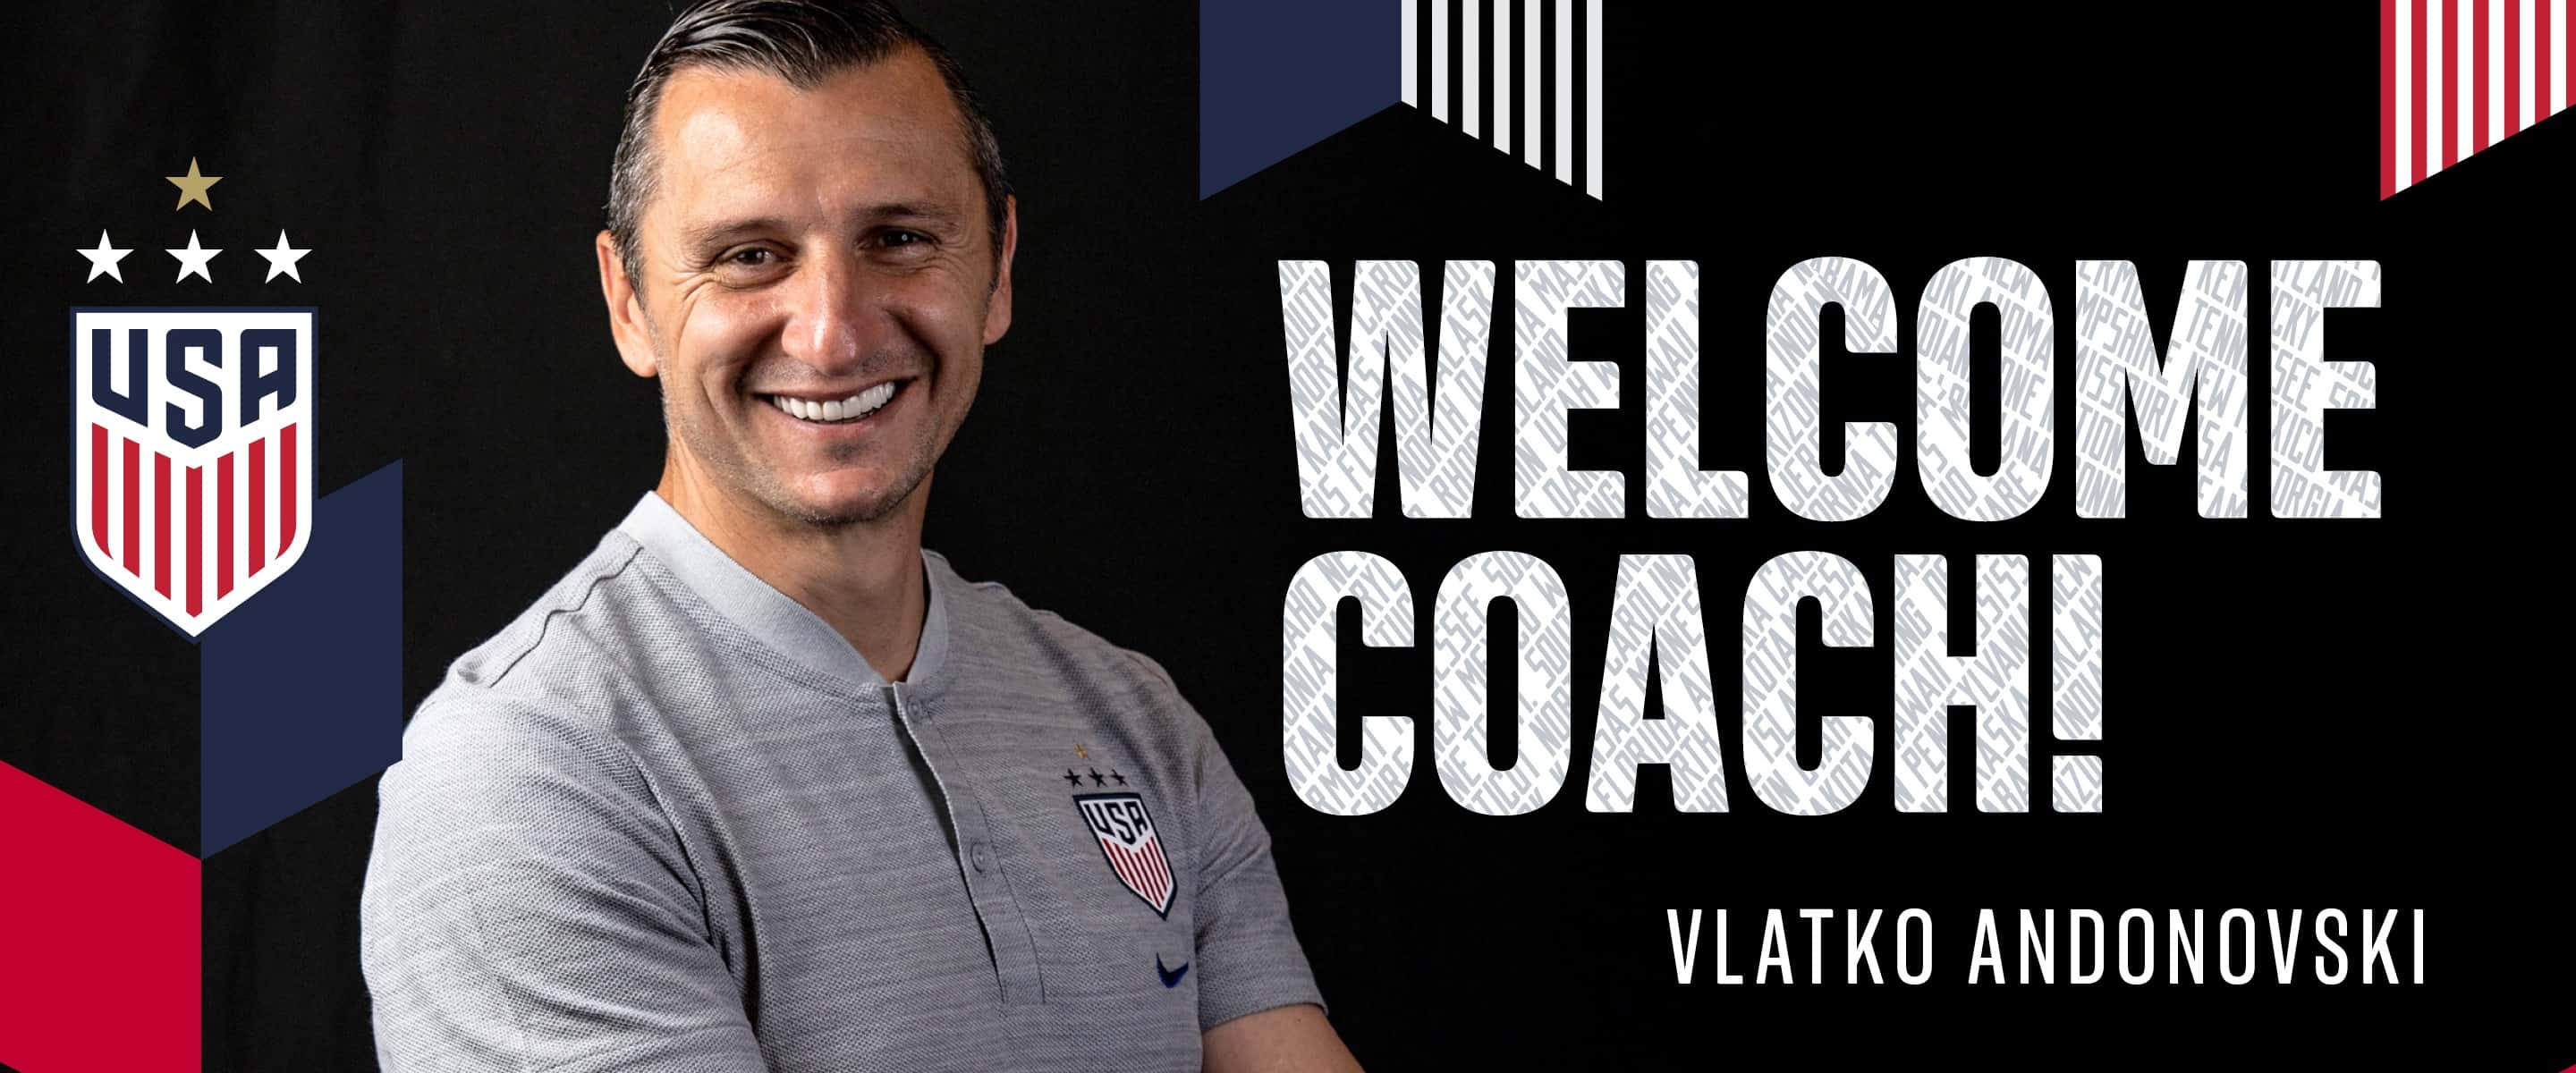 Vlatko Andonovski Named Head Coach of . Women's National Team